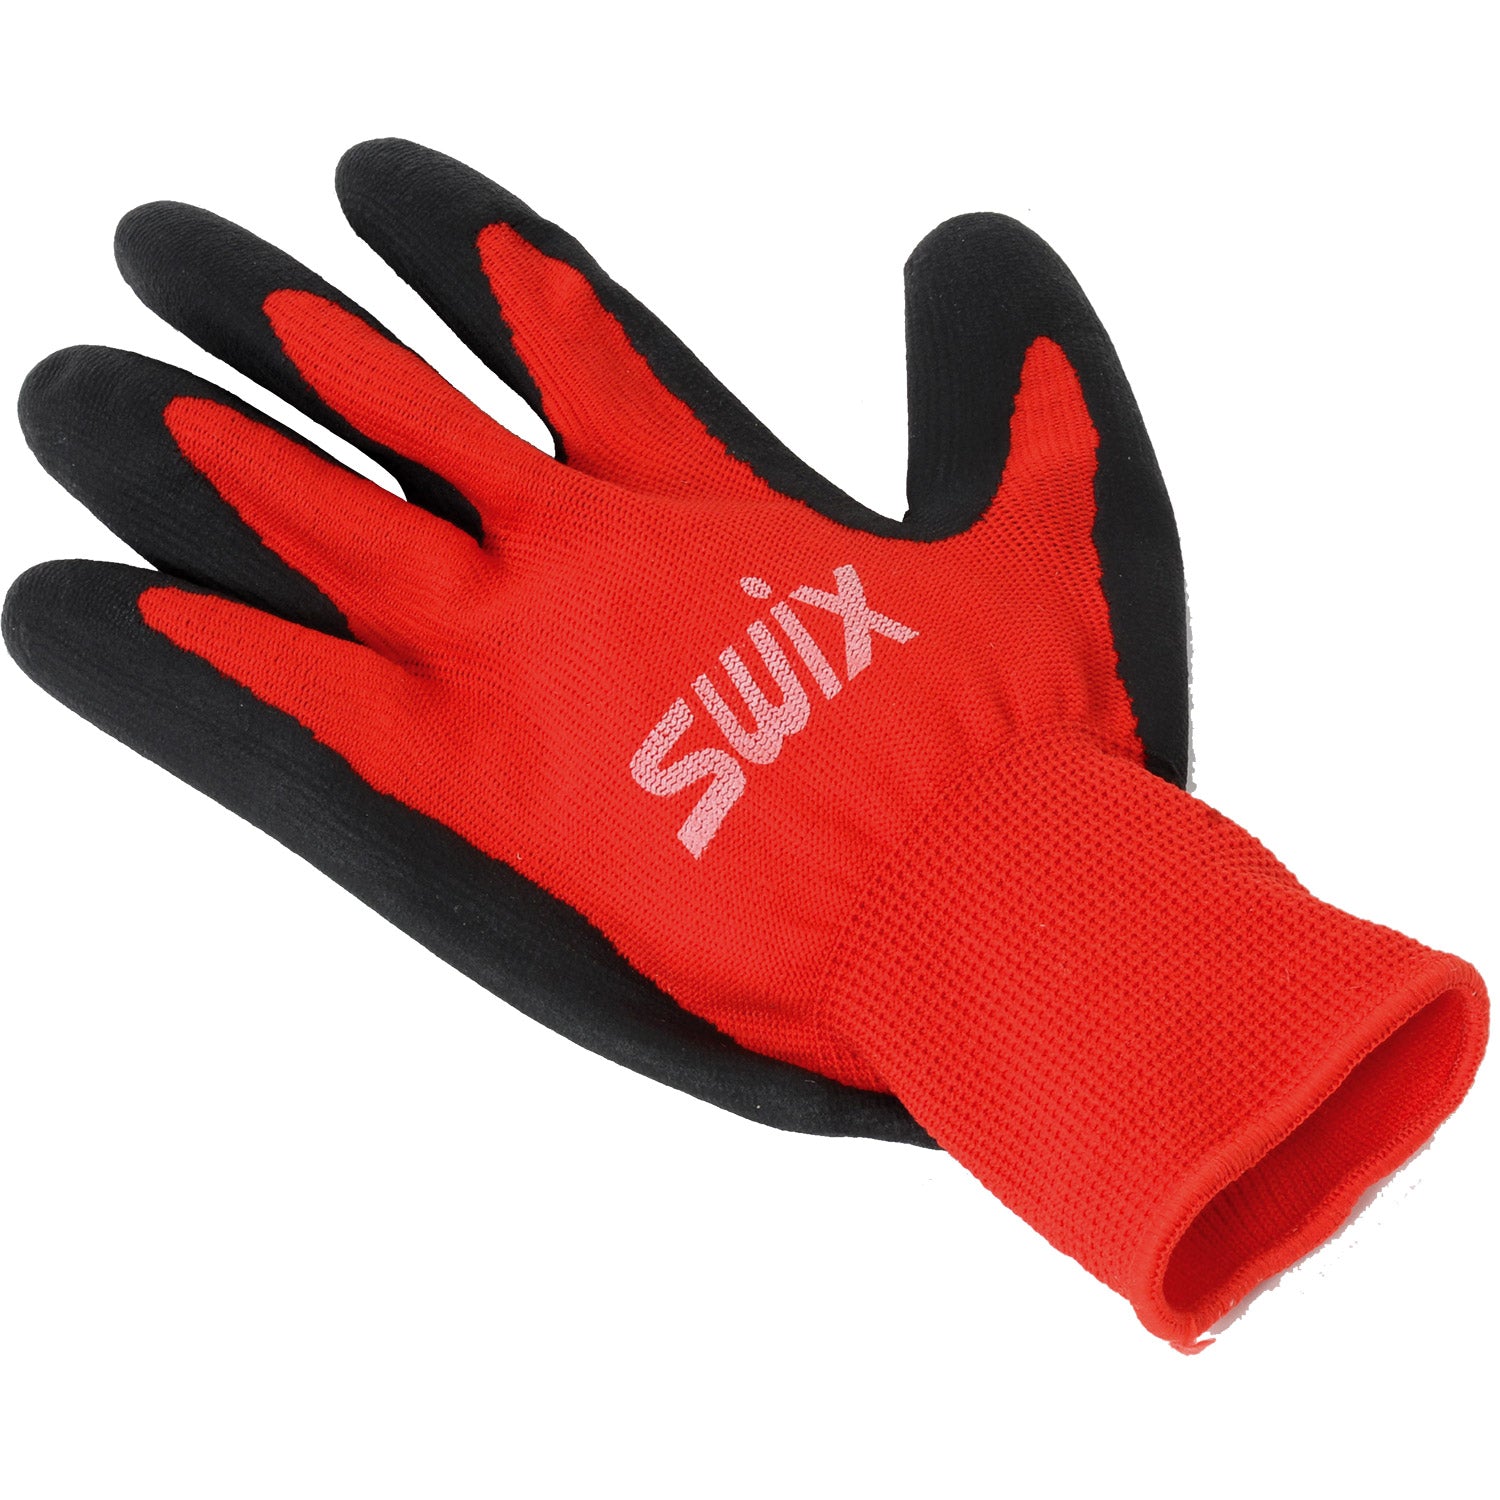 Swix Tuning Gloves R196